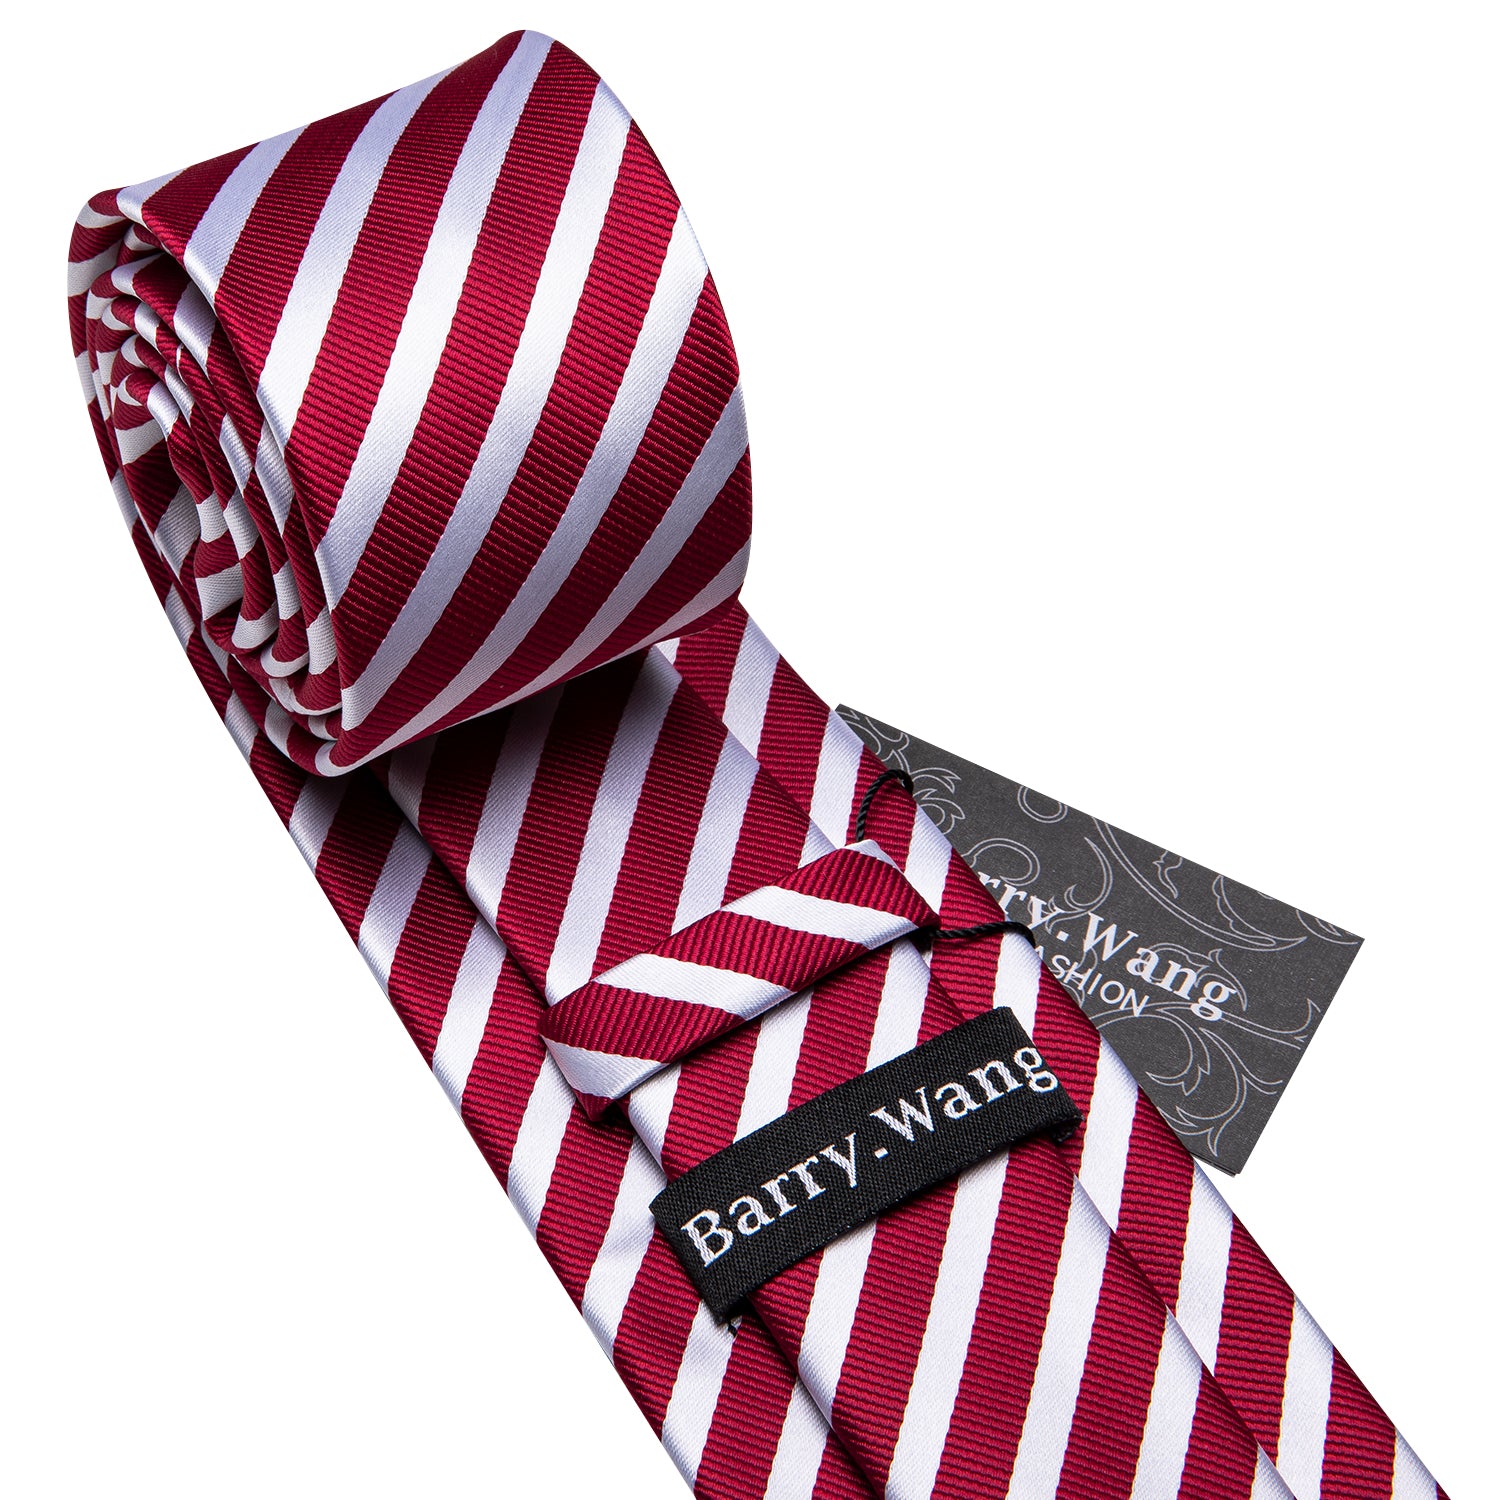 White and Red Stripe Tie Hanky Cufflinks Set